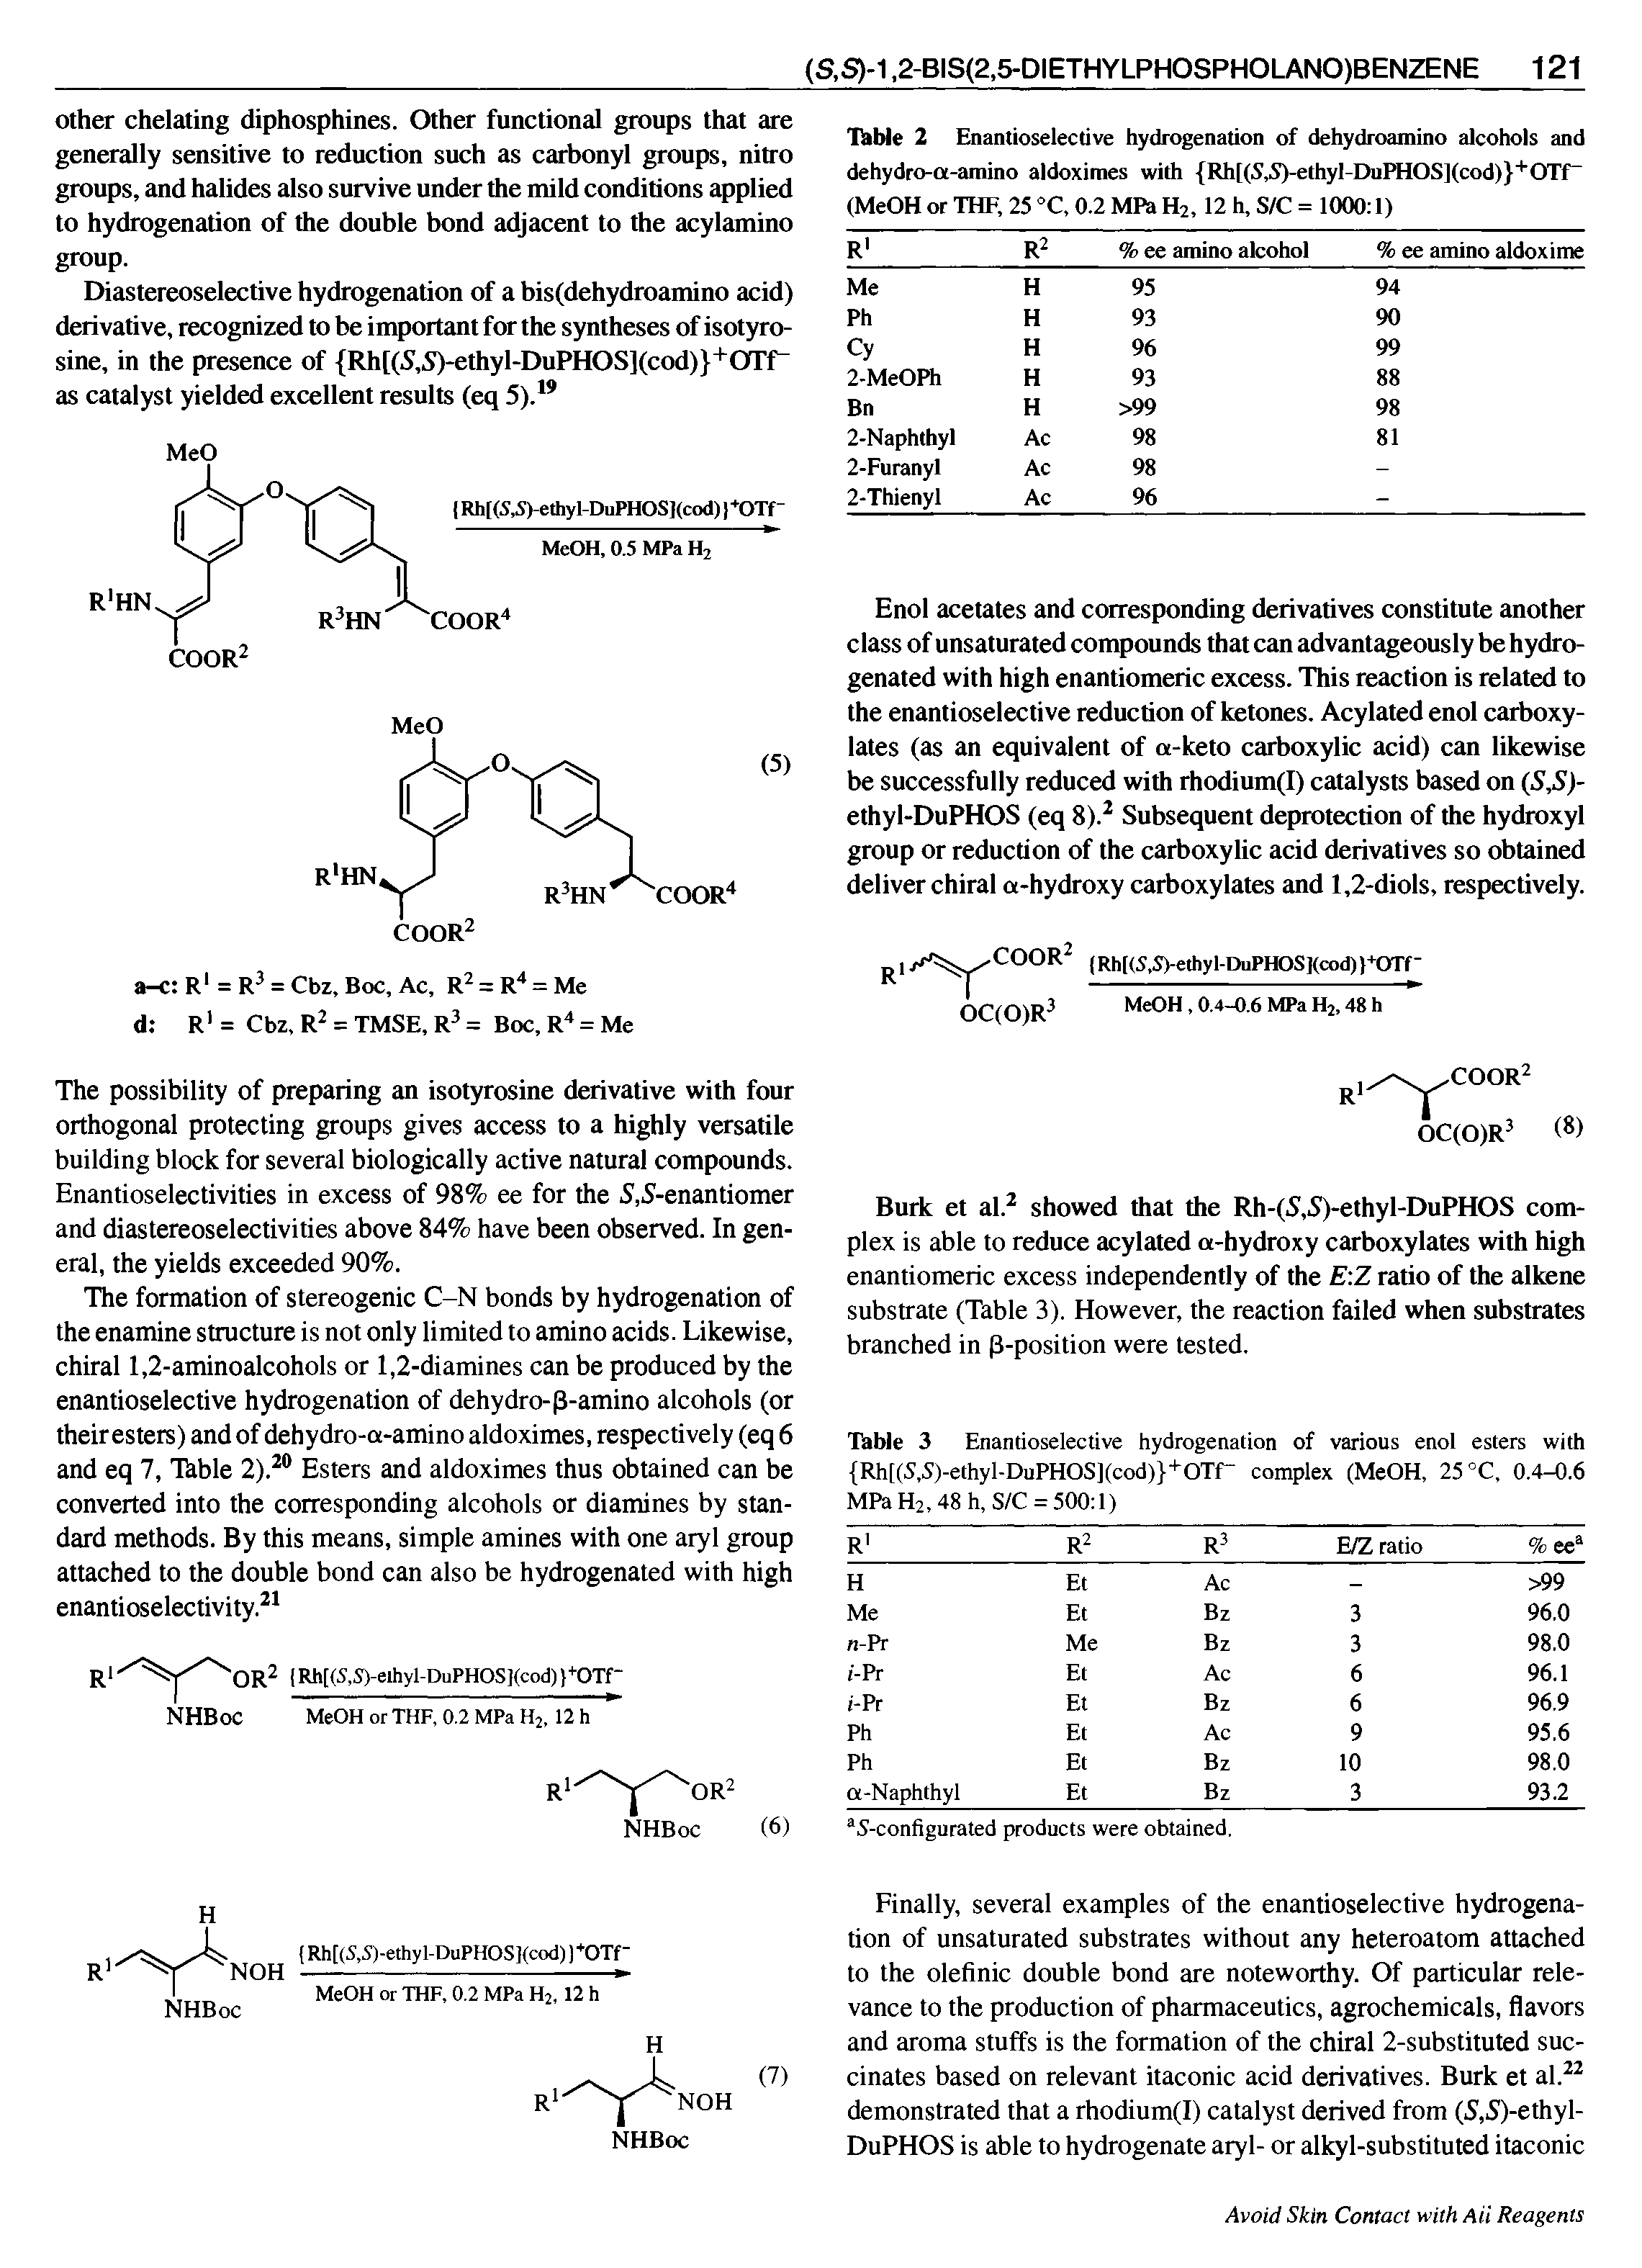 Table 3 Enantioselective hydrogenation of various enol Rh[(S,S)-ethyl-DuPHOS](cod) +OTr complex (MeOH, 25 MPaH2,48 h, S/C = 500 1) esters with °C, 0.4-0.6...